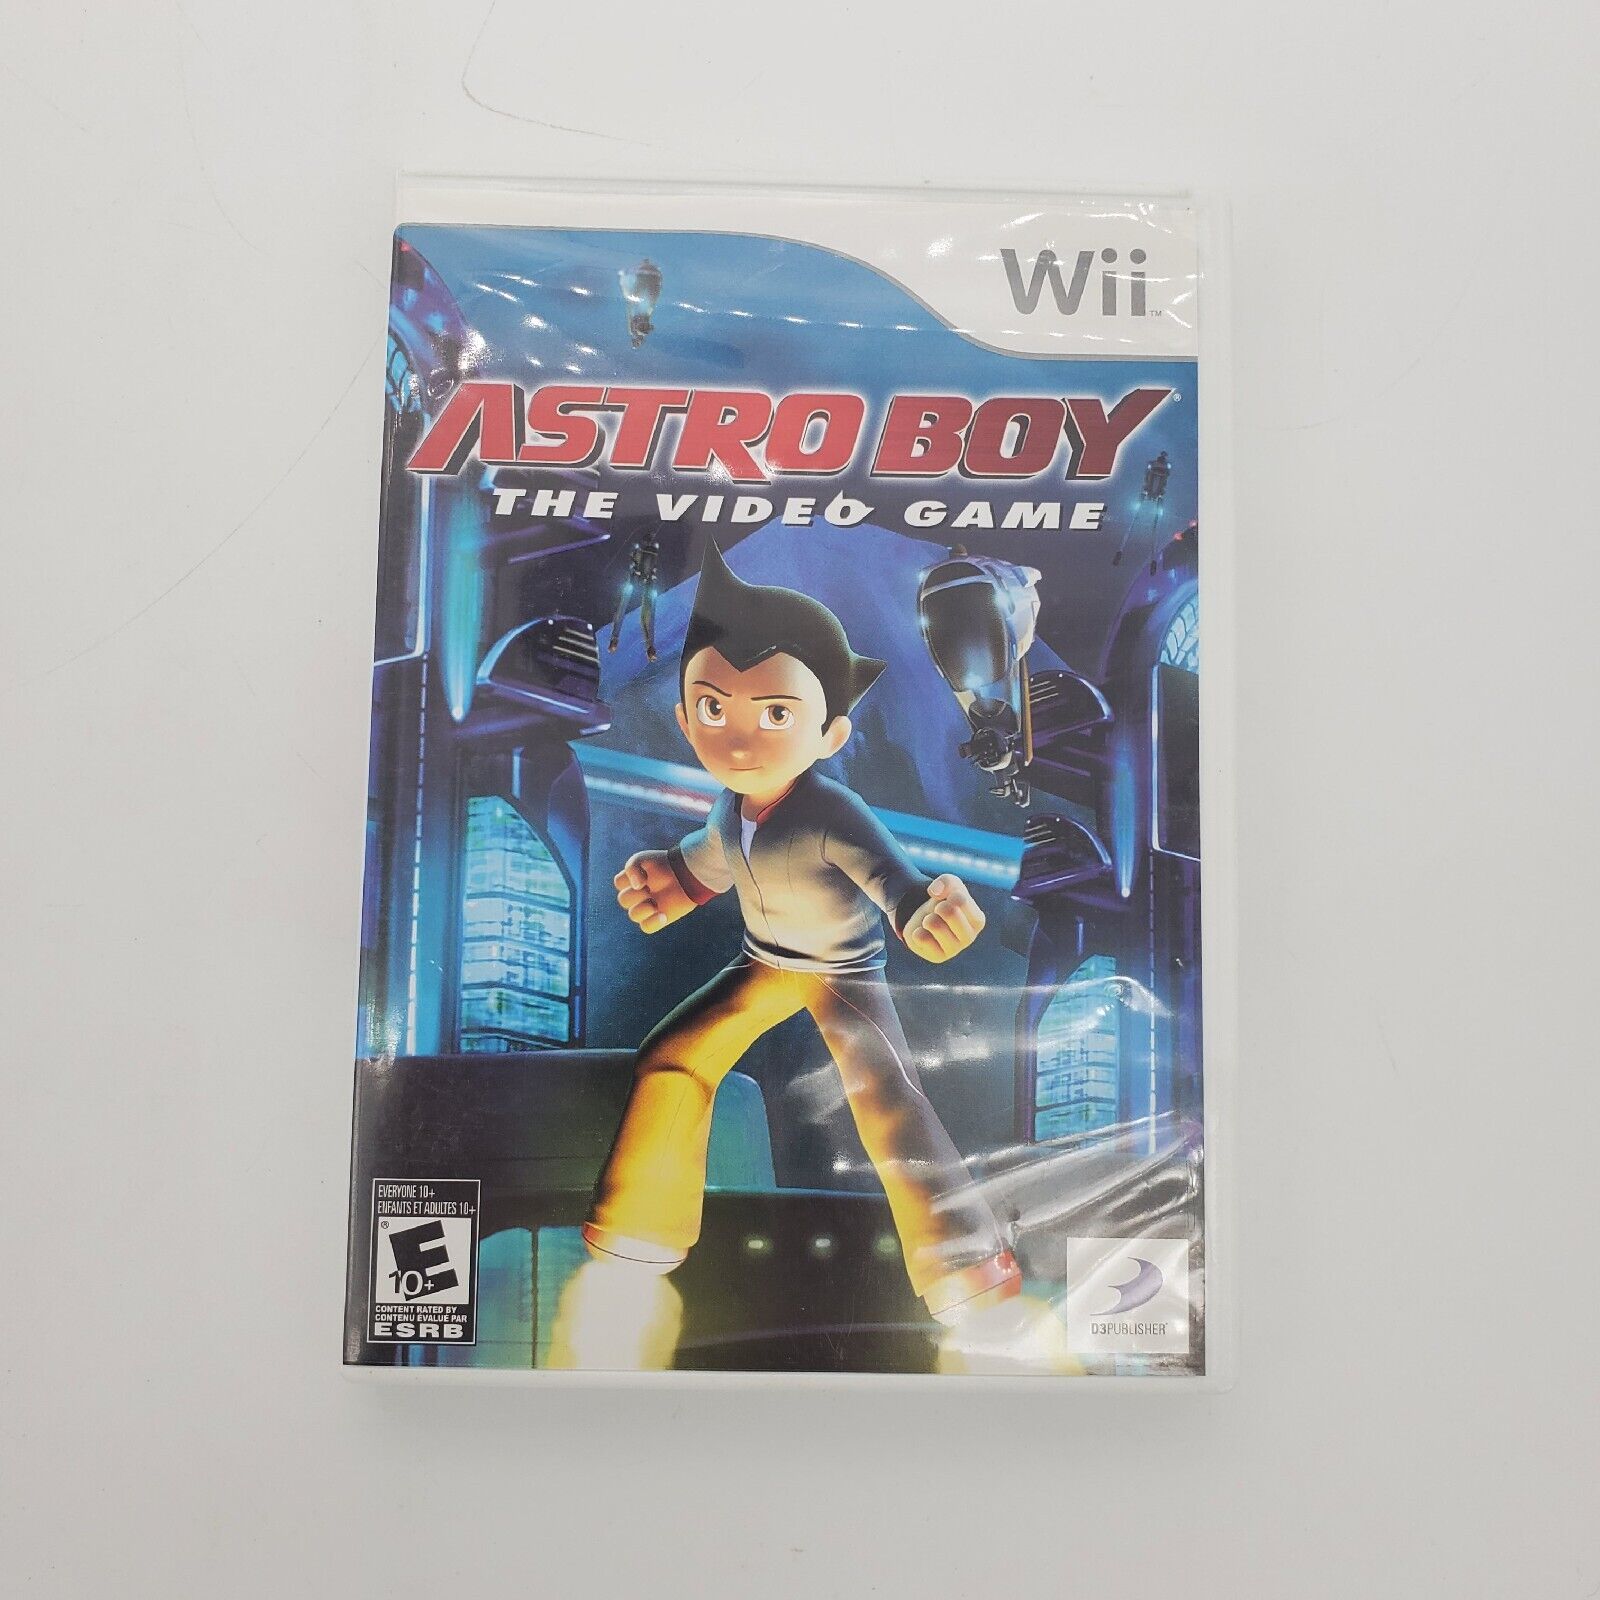 Astro Boy The Video Game (Nintendo Wii Wii U) w/ Original Case MISSING MANUAL